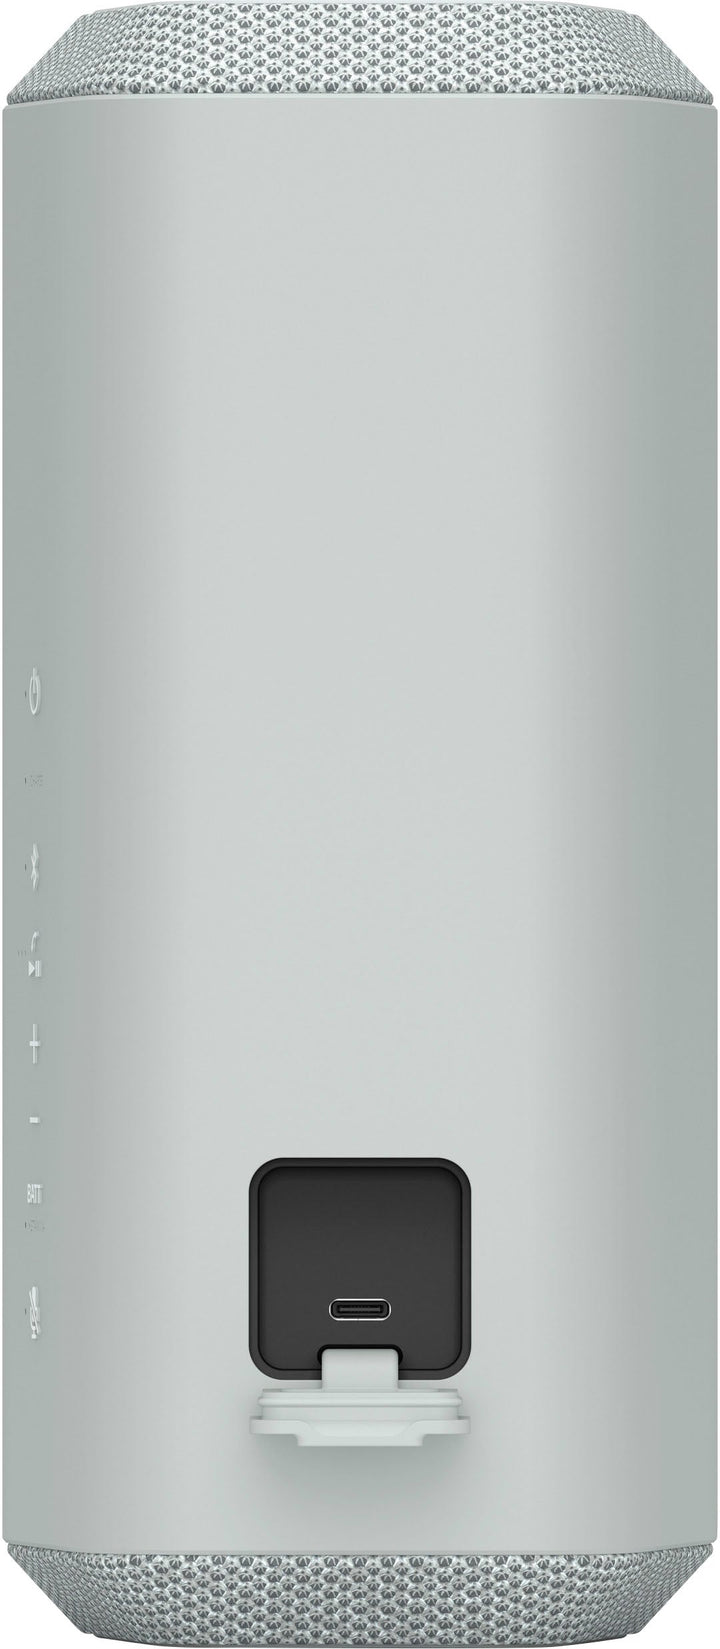 Sony - XE300 Portable X-Series Bluetooth Speaker - Light Gray_4